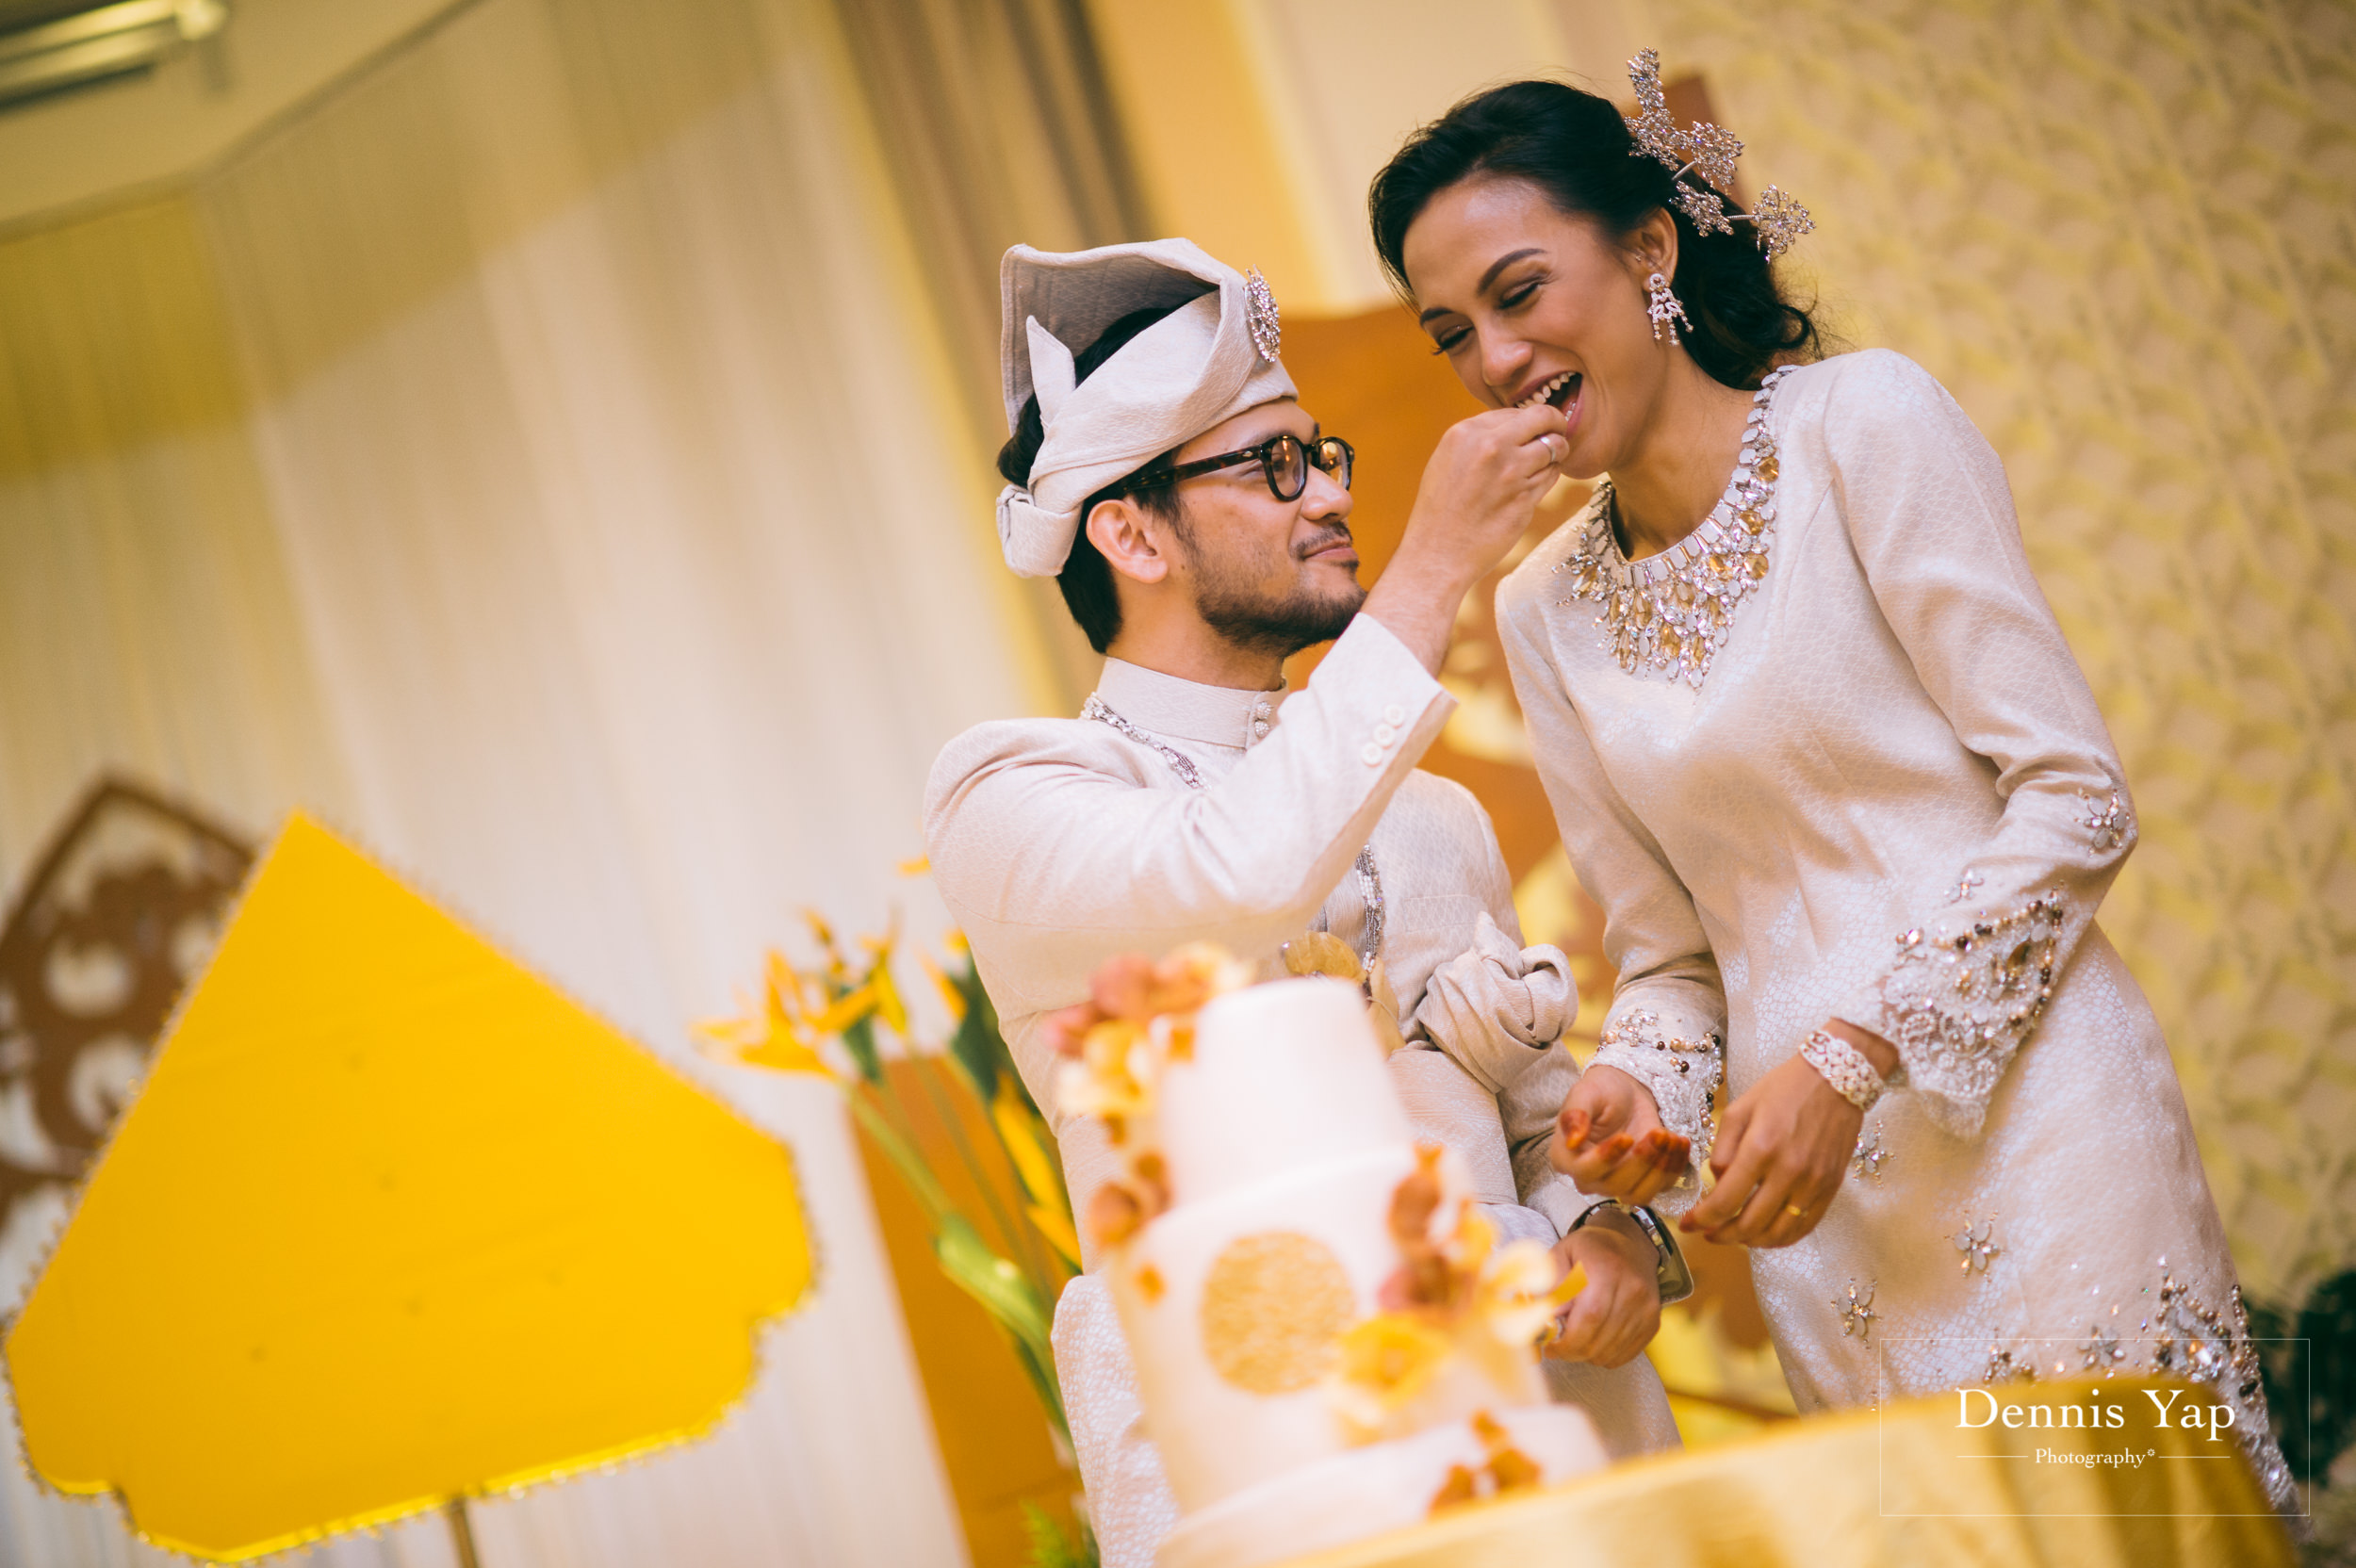 zarif hanalili malay wedding blessing ceremony dennis yap photography-24.jpg